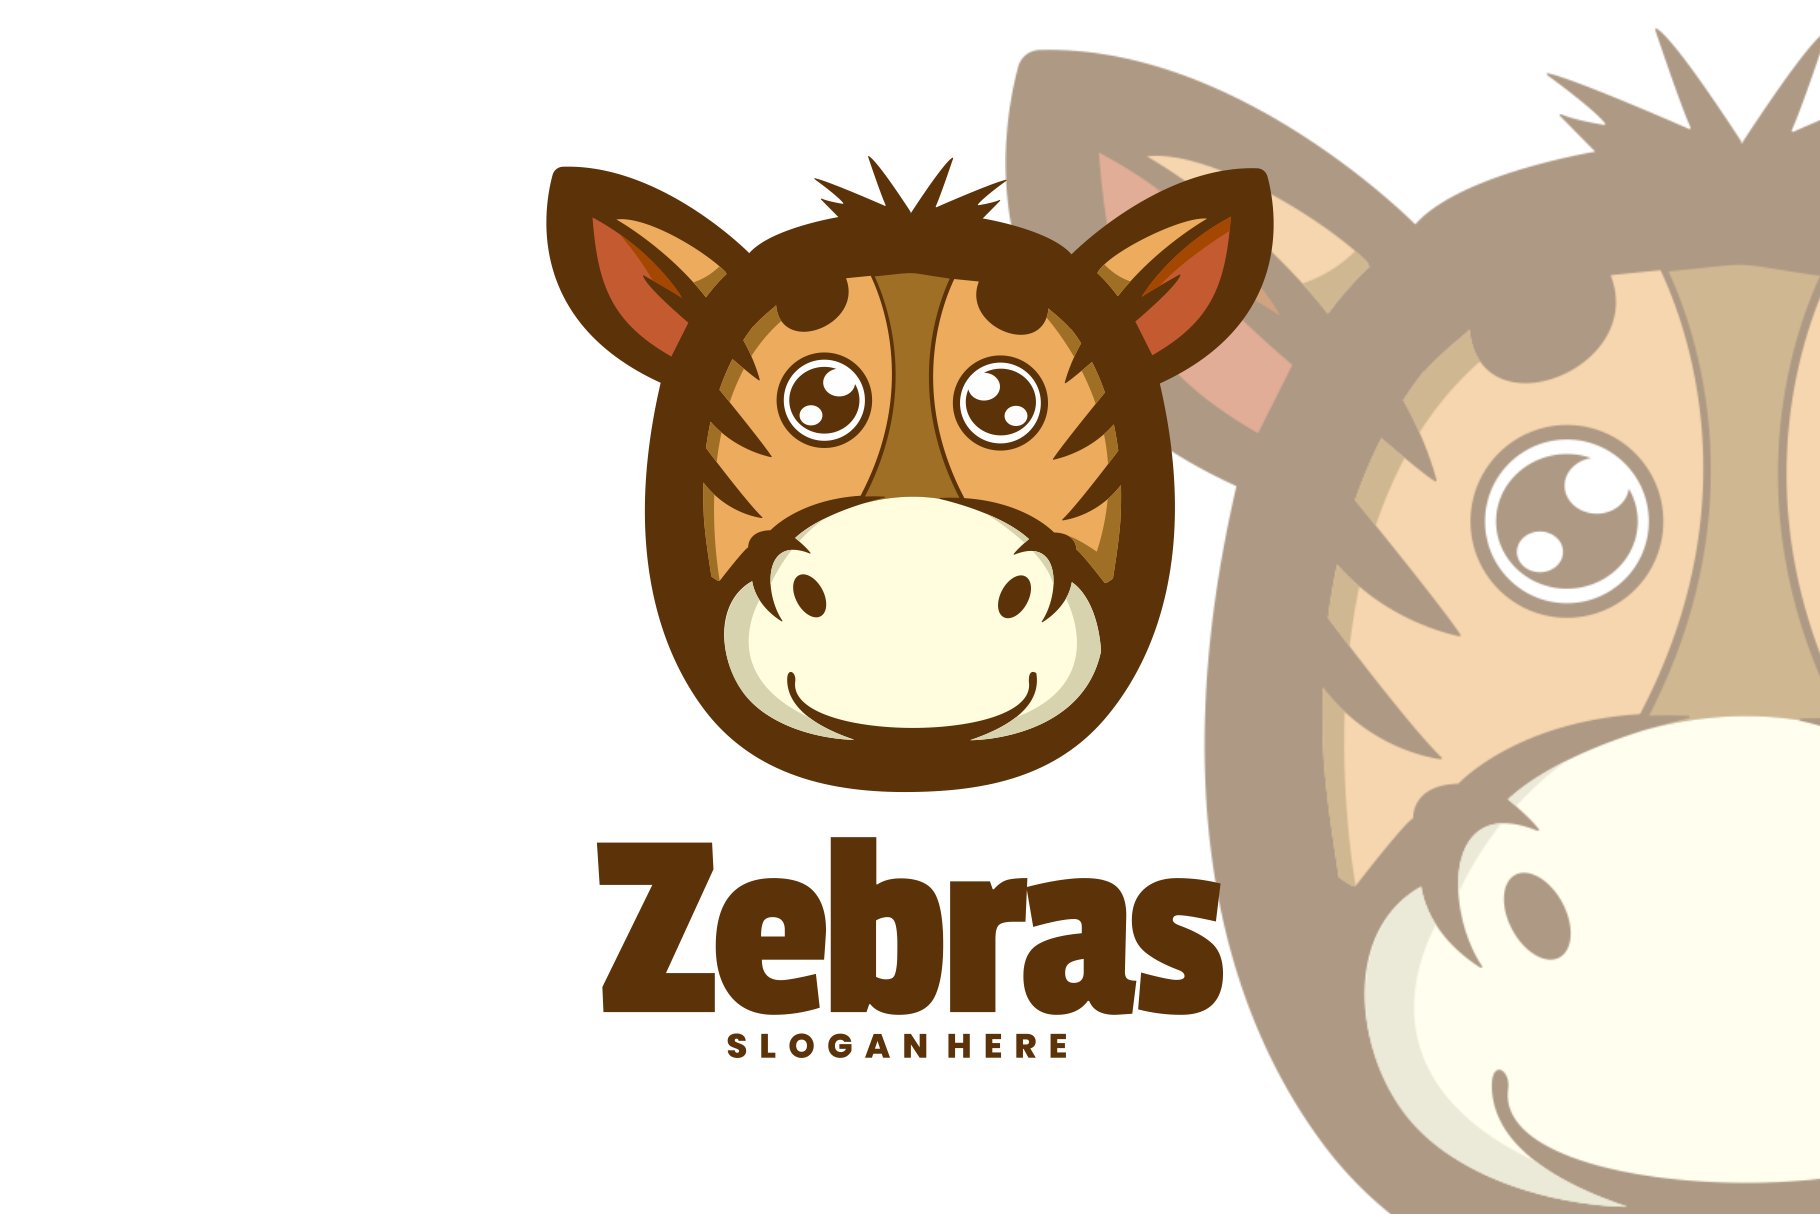 Zebras Logo Vector cover image.